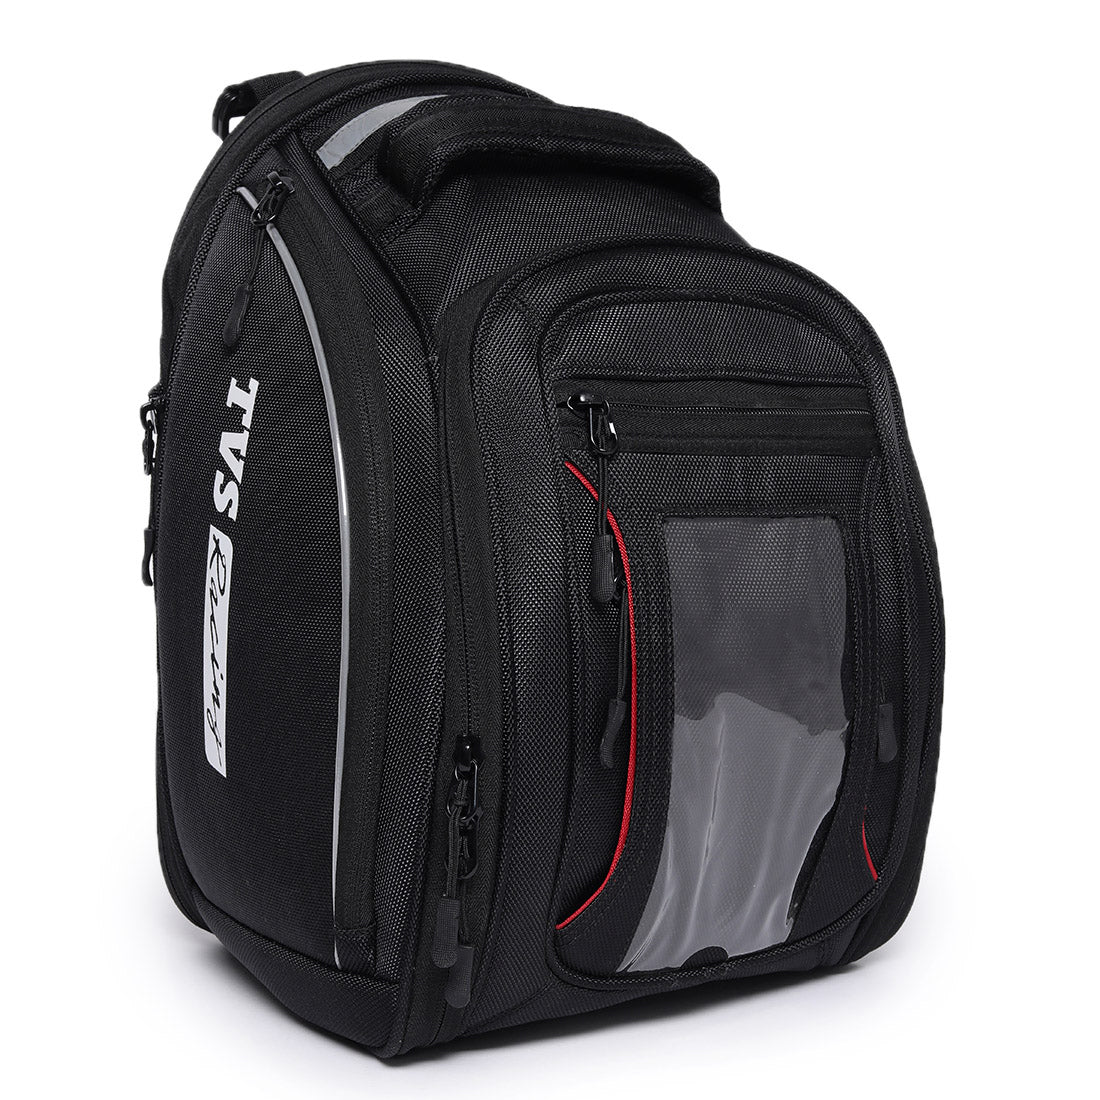  TVS Racing Tank Bag for Bike Riding - Convertible Backpack, Magnetic, Glove Storage with Mobile Pocket - Versatile Tank Bag for Bike - Durable, Spacious, Semi-Rigid Design